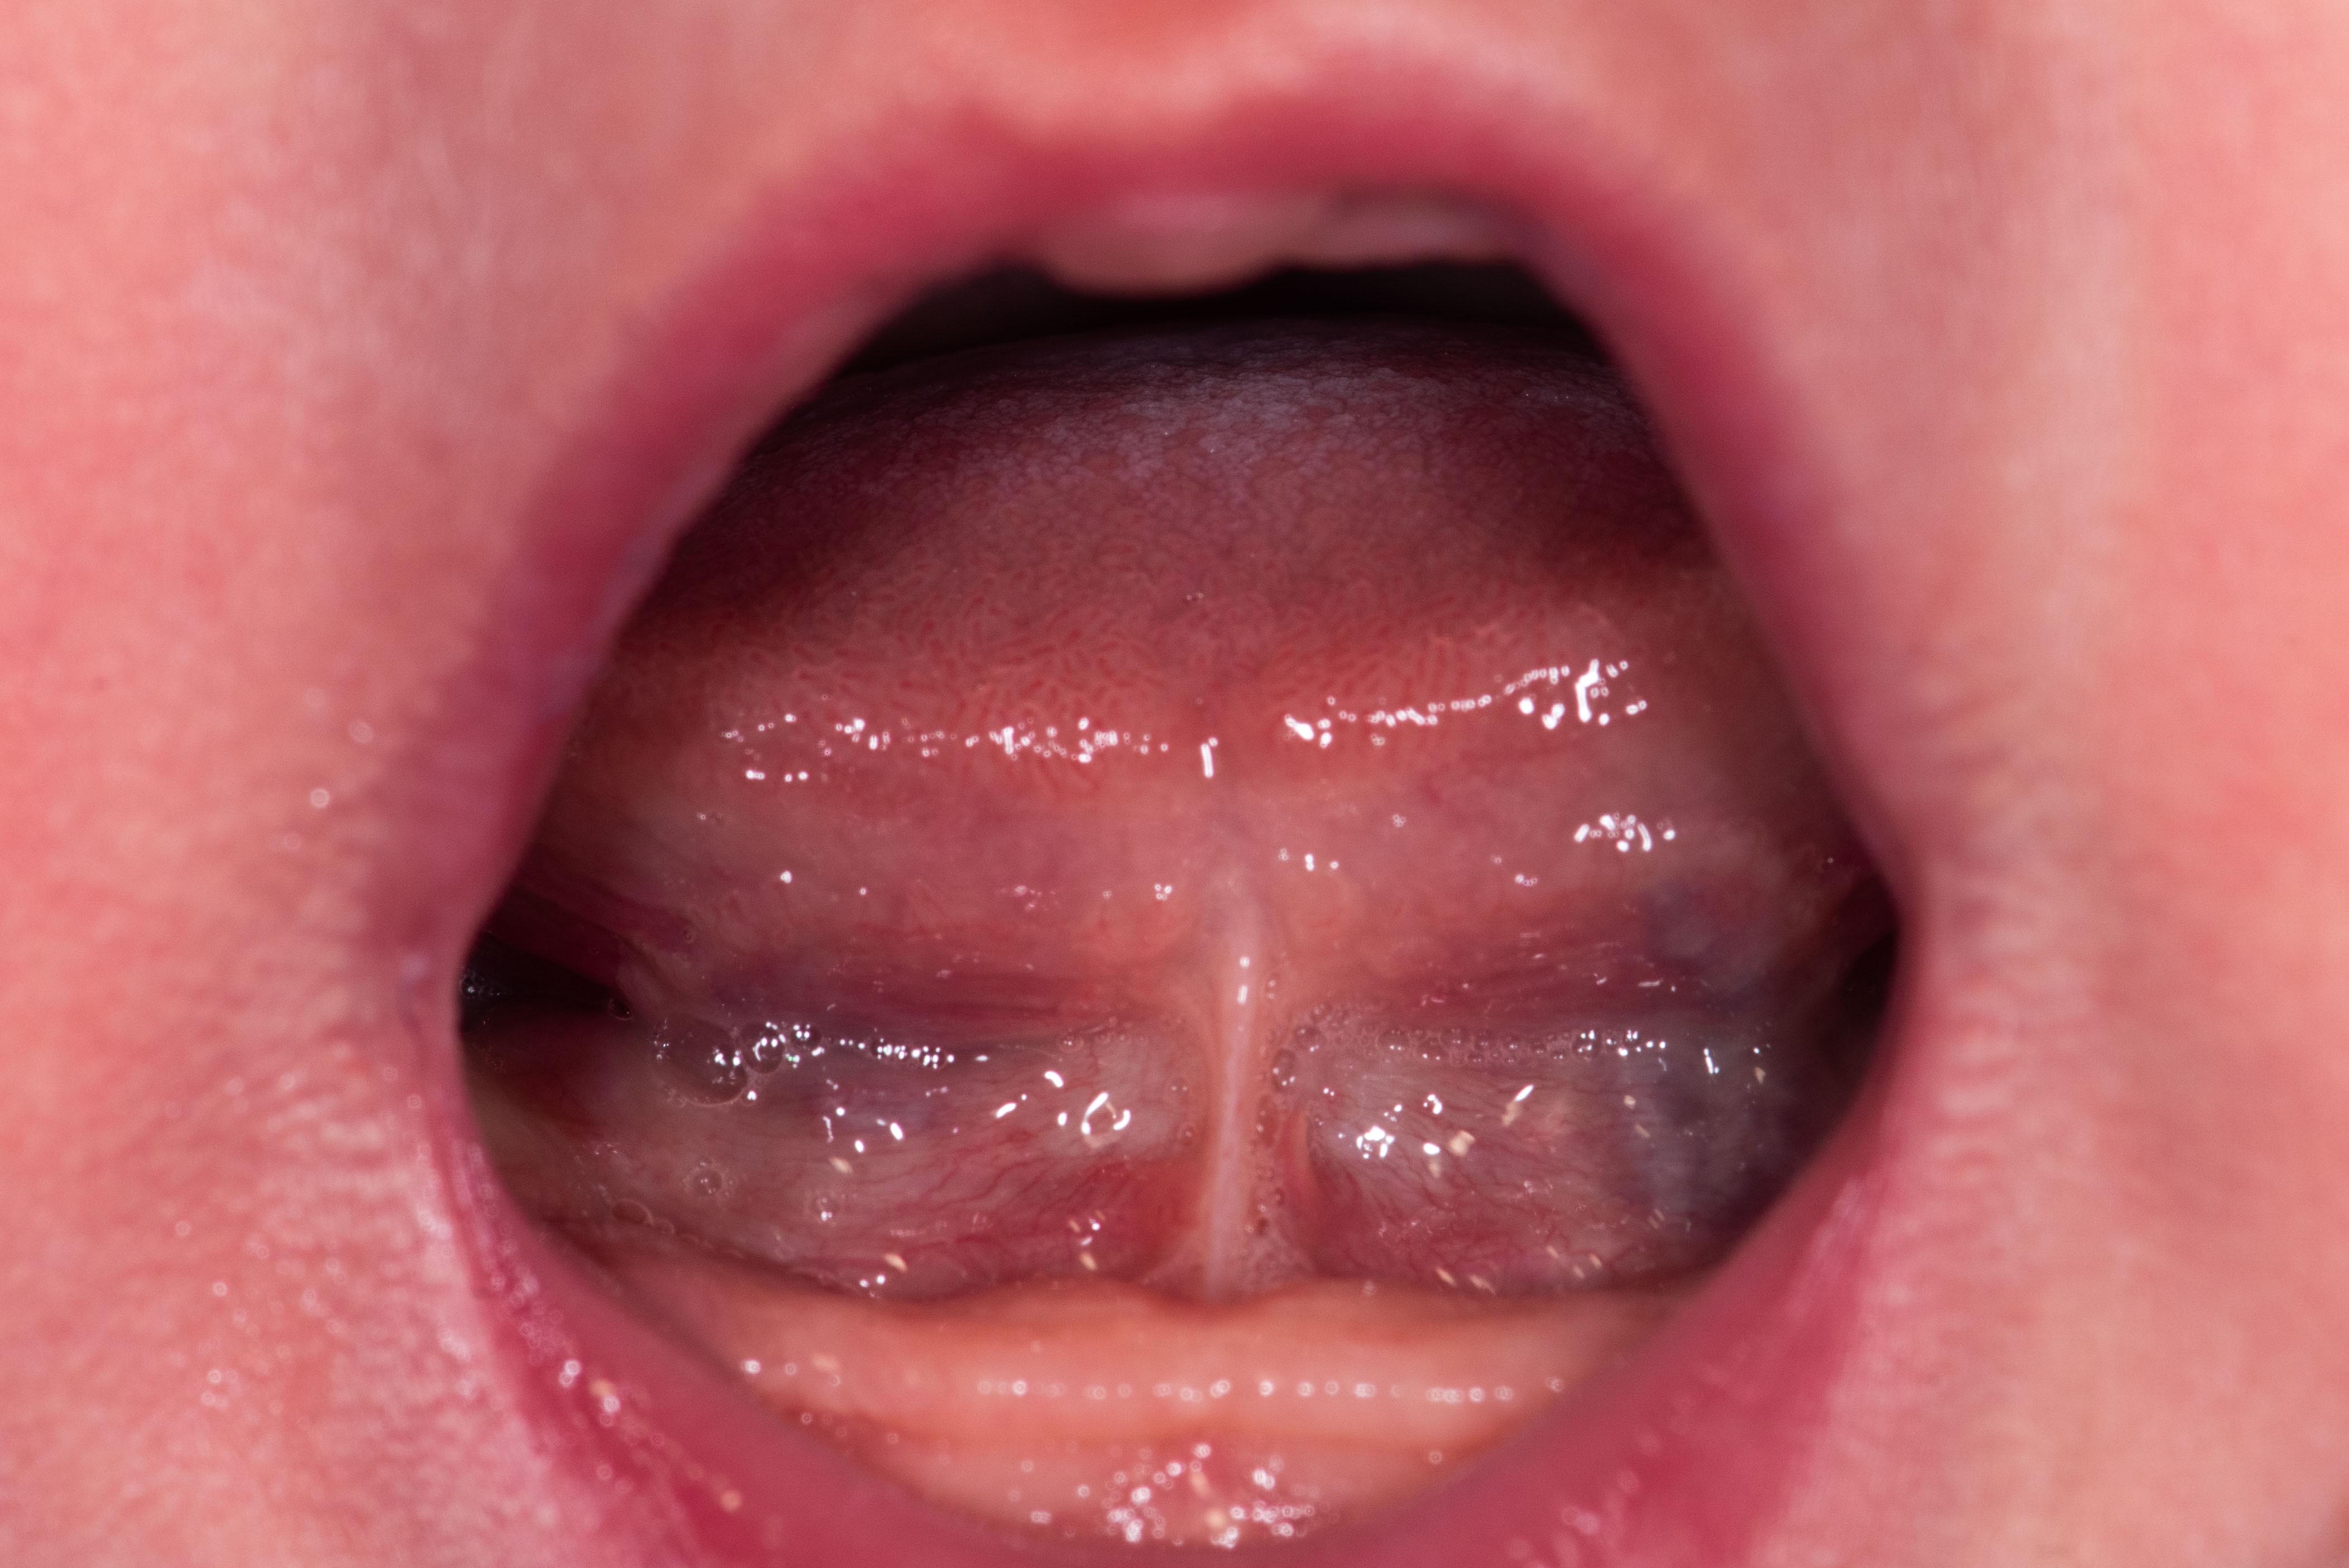 Anterior tongue-tie